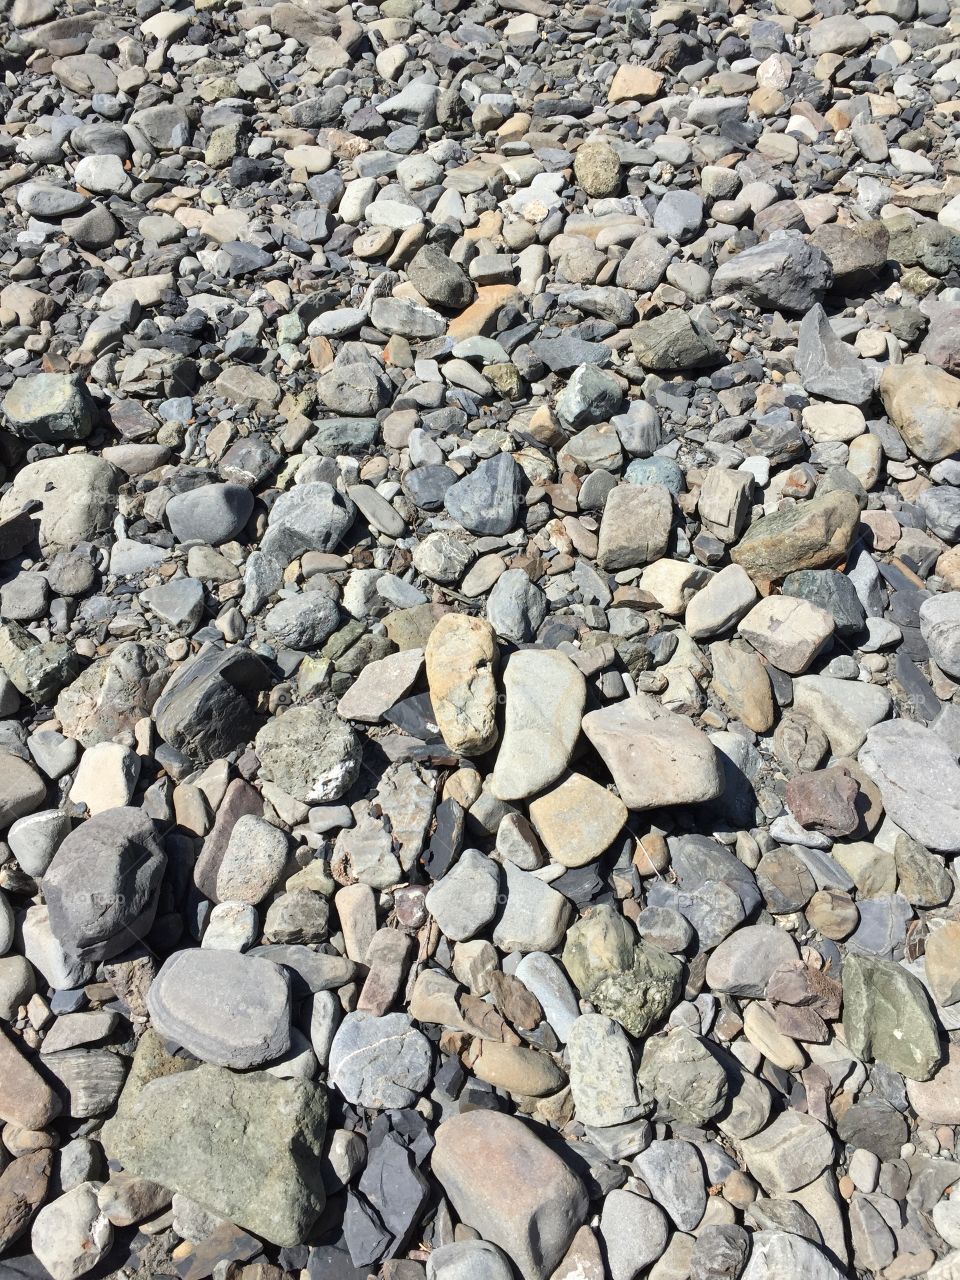 Camping, rocks, pebbles ground, stones, patterns, grays